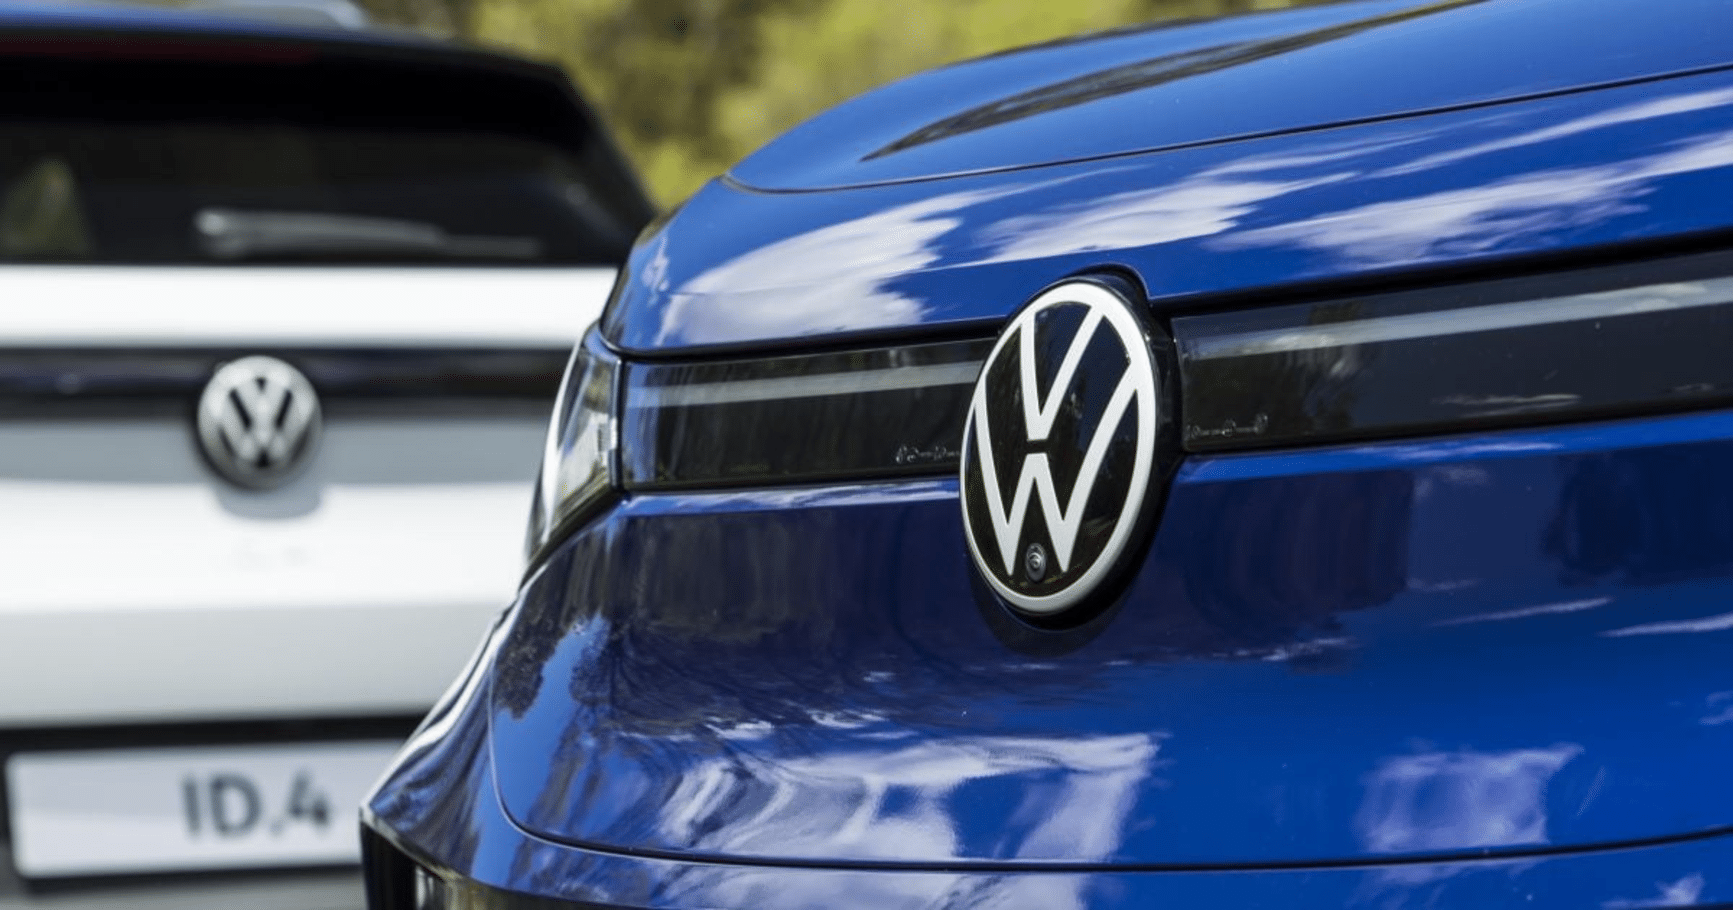 Volkswagen’s Tesla Rival, the ID.4, Faces Delays in Australia